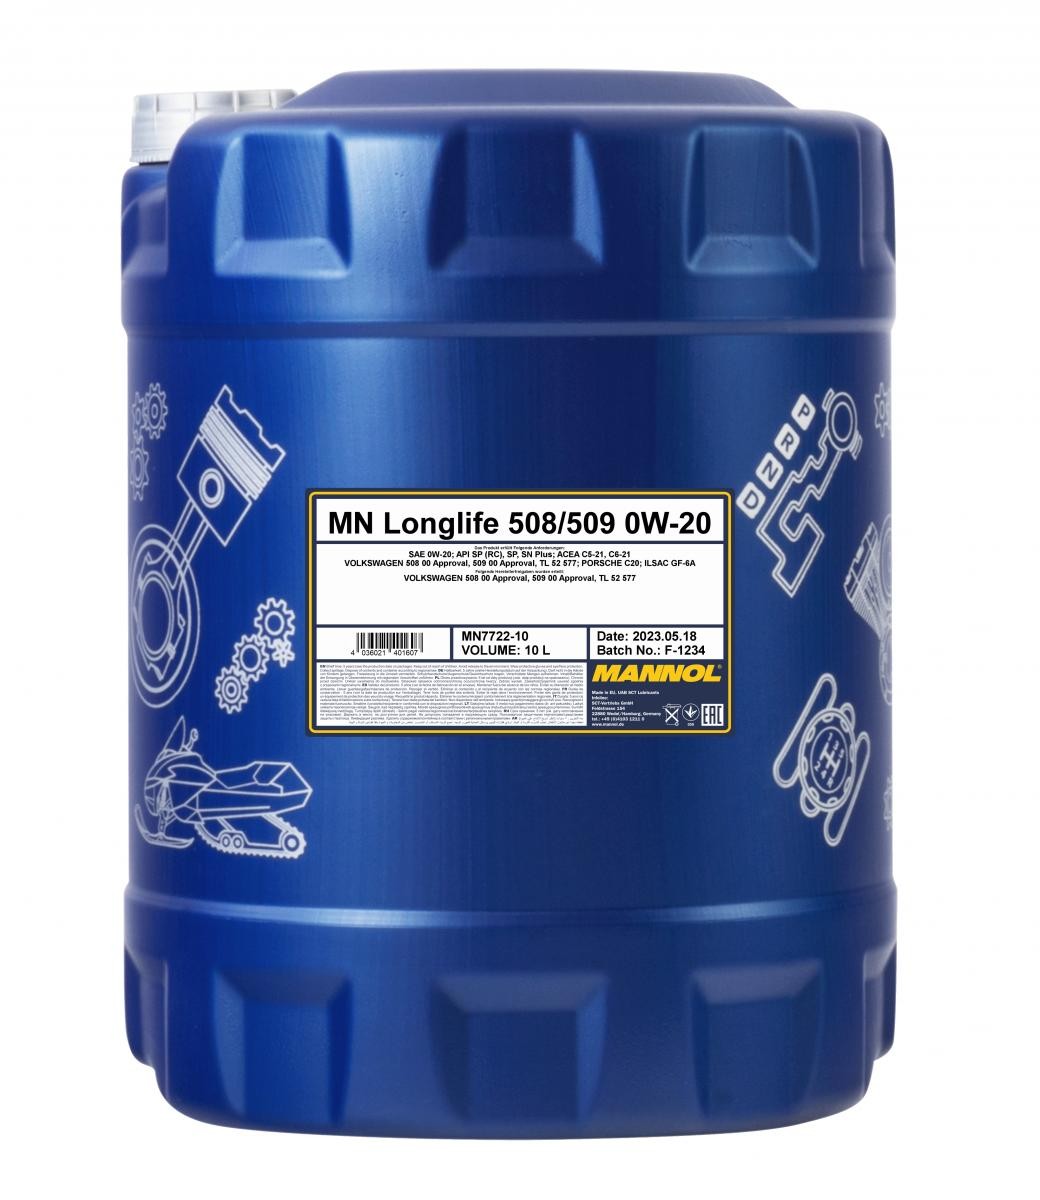 Auto oil 0W20 longlife diesel - MN7722-10 MANNOL Longlife 508/509